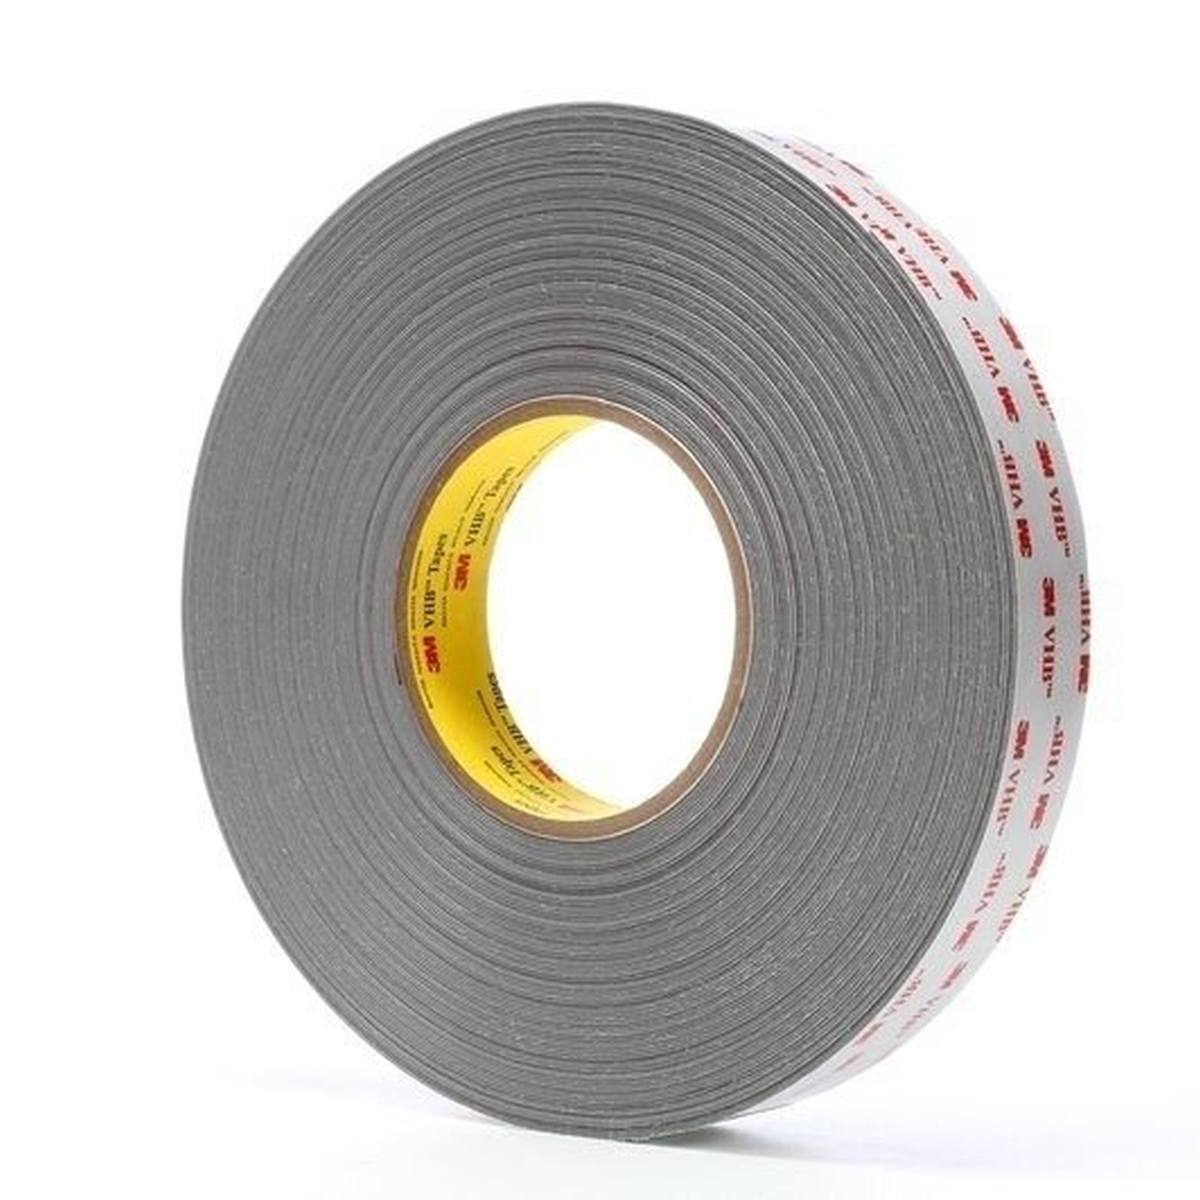 3M VHB Adhesive tape RP 32 P, grey, 9 mm x 66 m, 0.8 mm